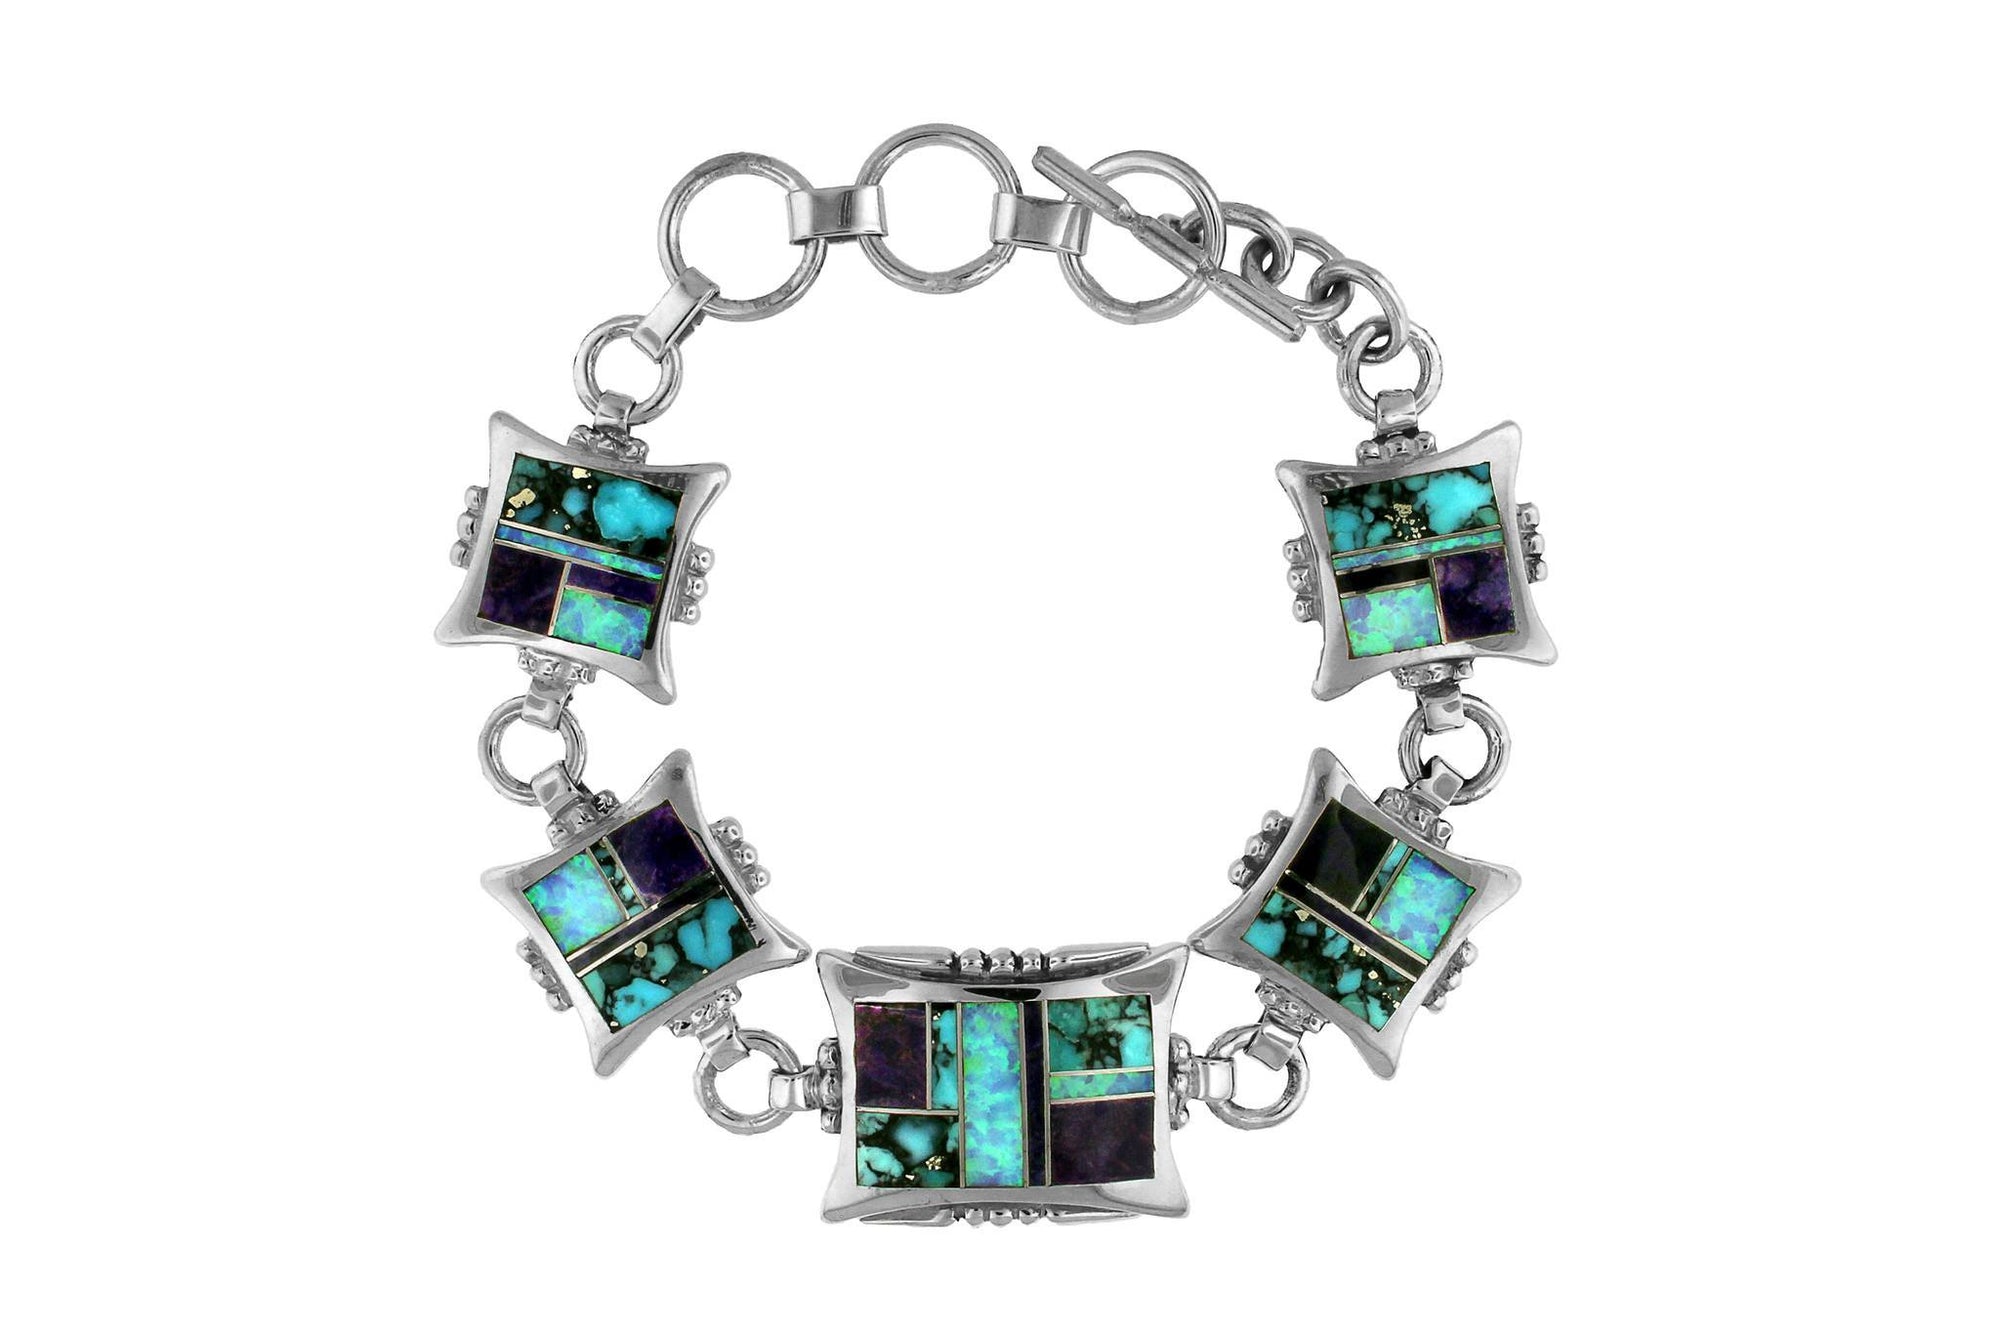 David Rosales Shalako Bracelet - Native American Turquoise Jewelry